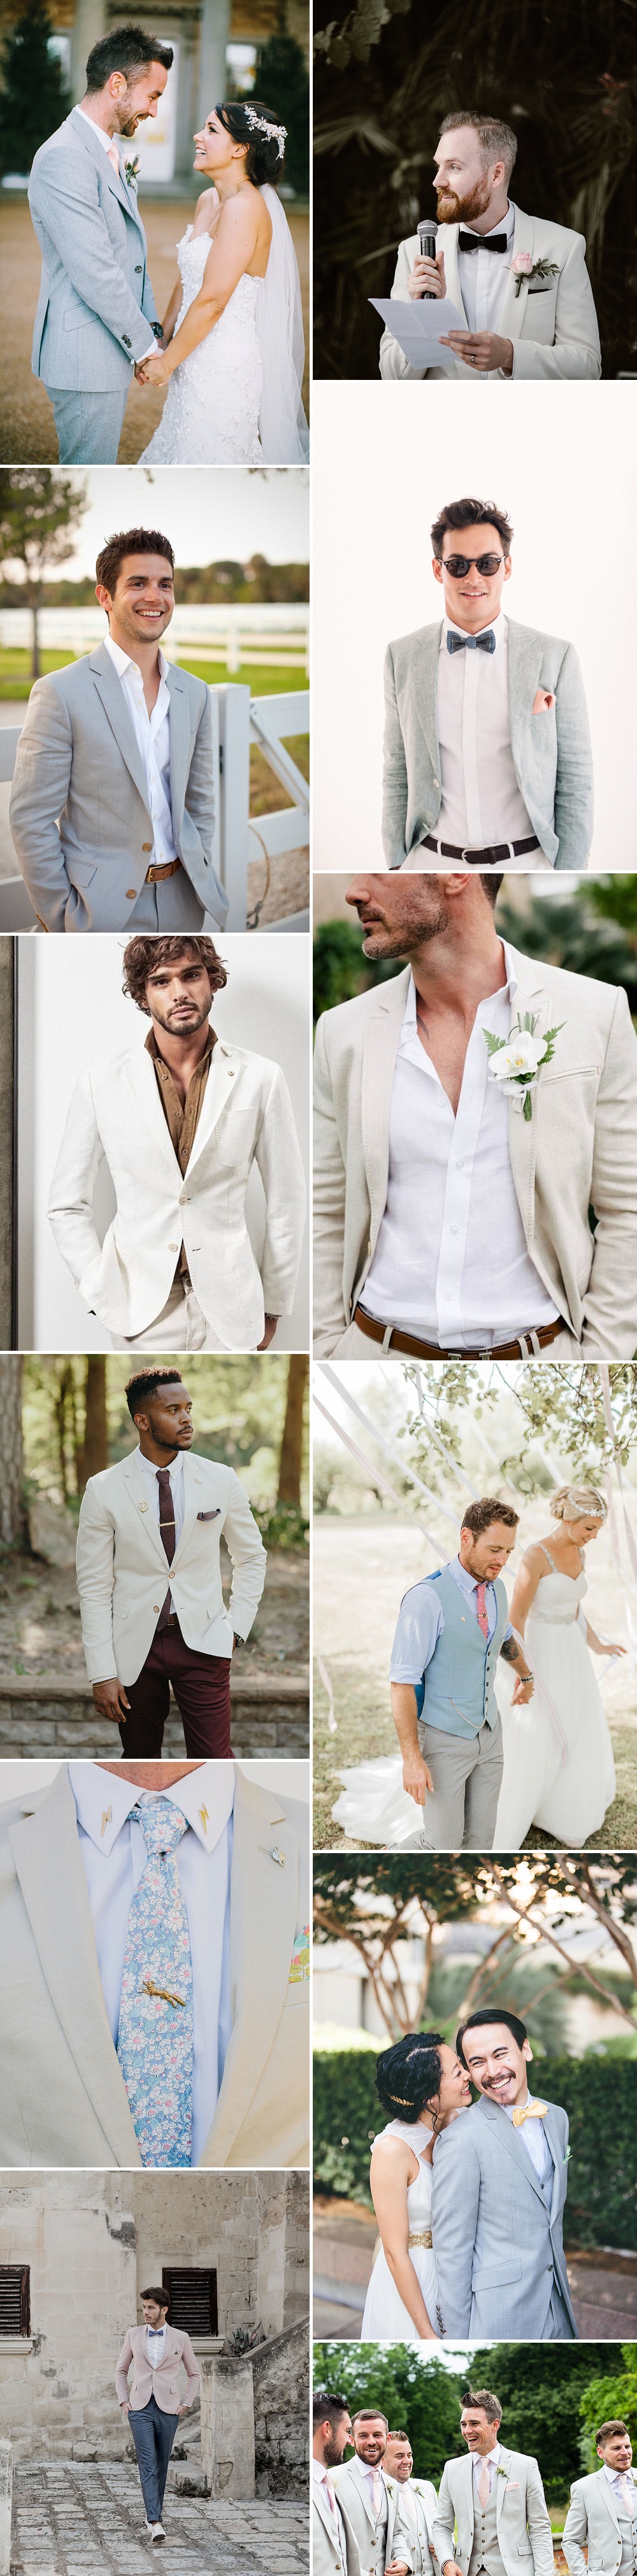 wedding day suit ideas